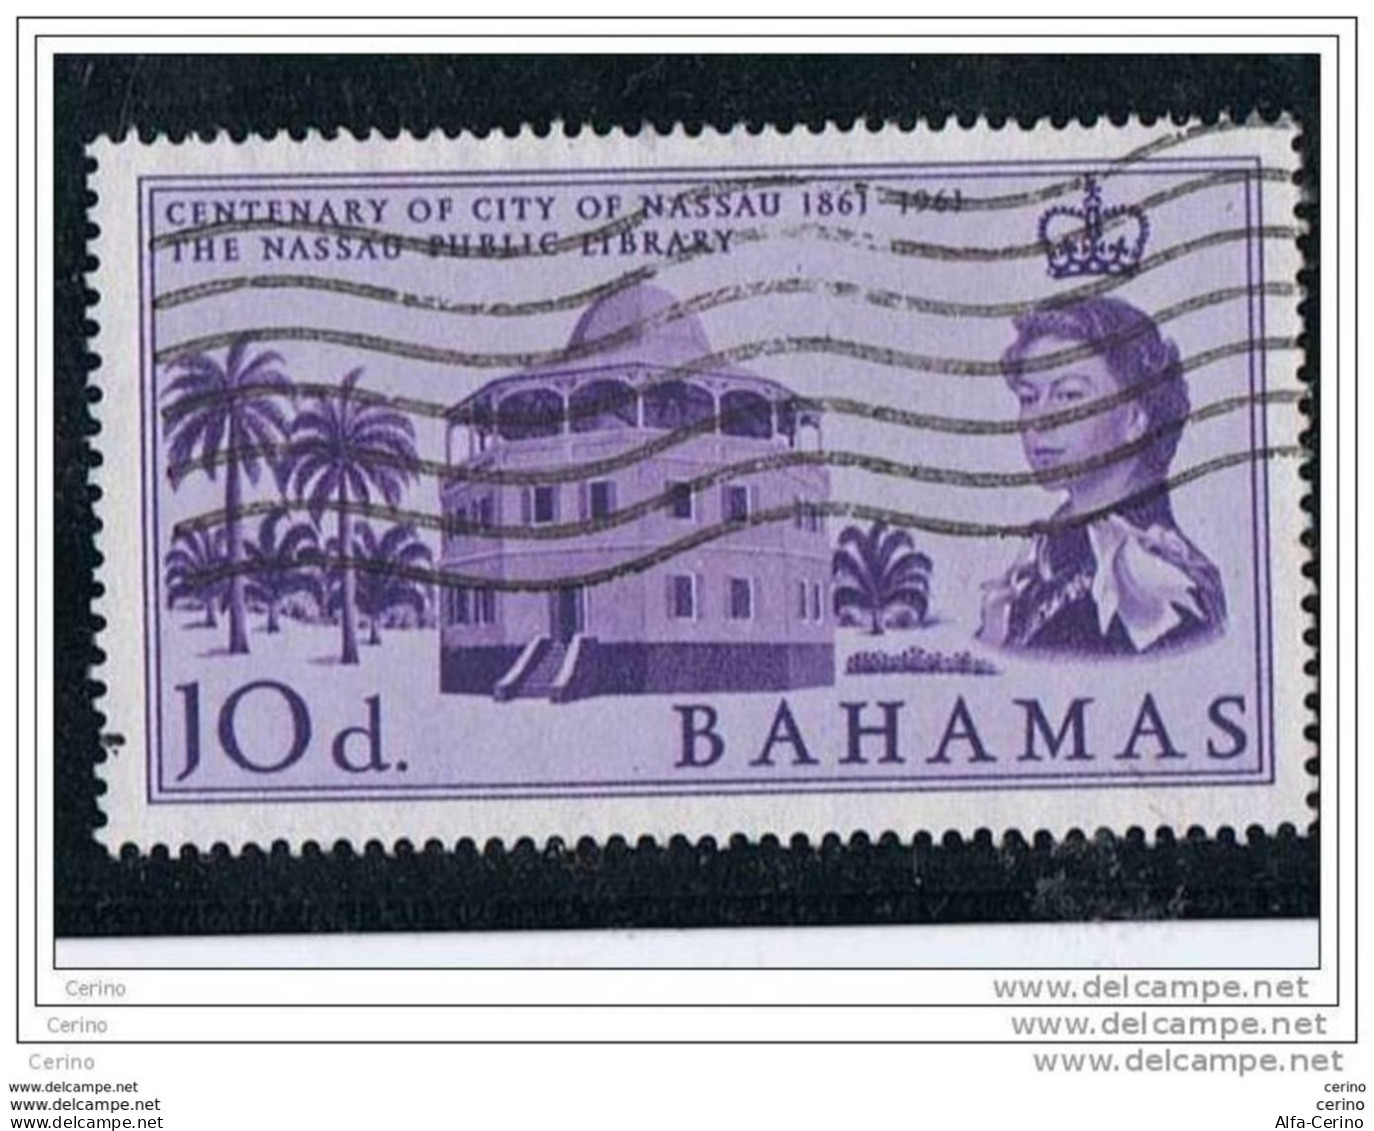 BAHAMAS:  1962  CENTENARY  NASSAU  CITY  -  10 P. USED  STAMP  -  YV/TELL. 168 - 1859-1963 Crown Colony